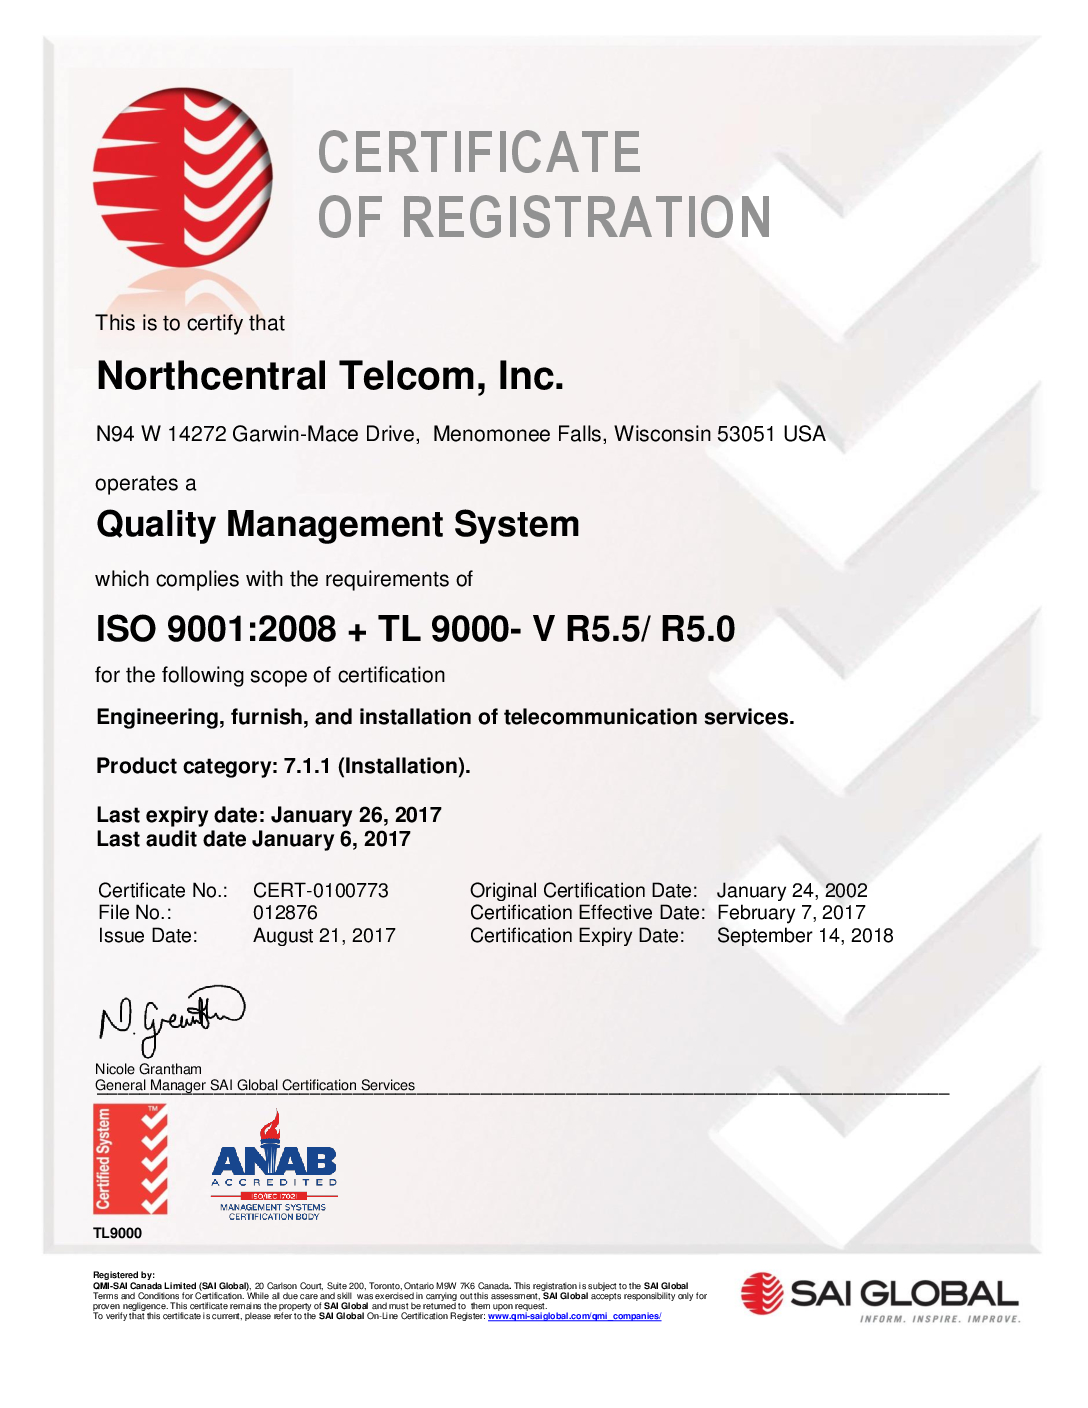 Northcentral Telcom ISO 9001:2008 & TL 9000 Certification 